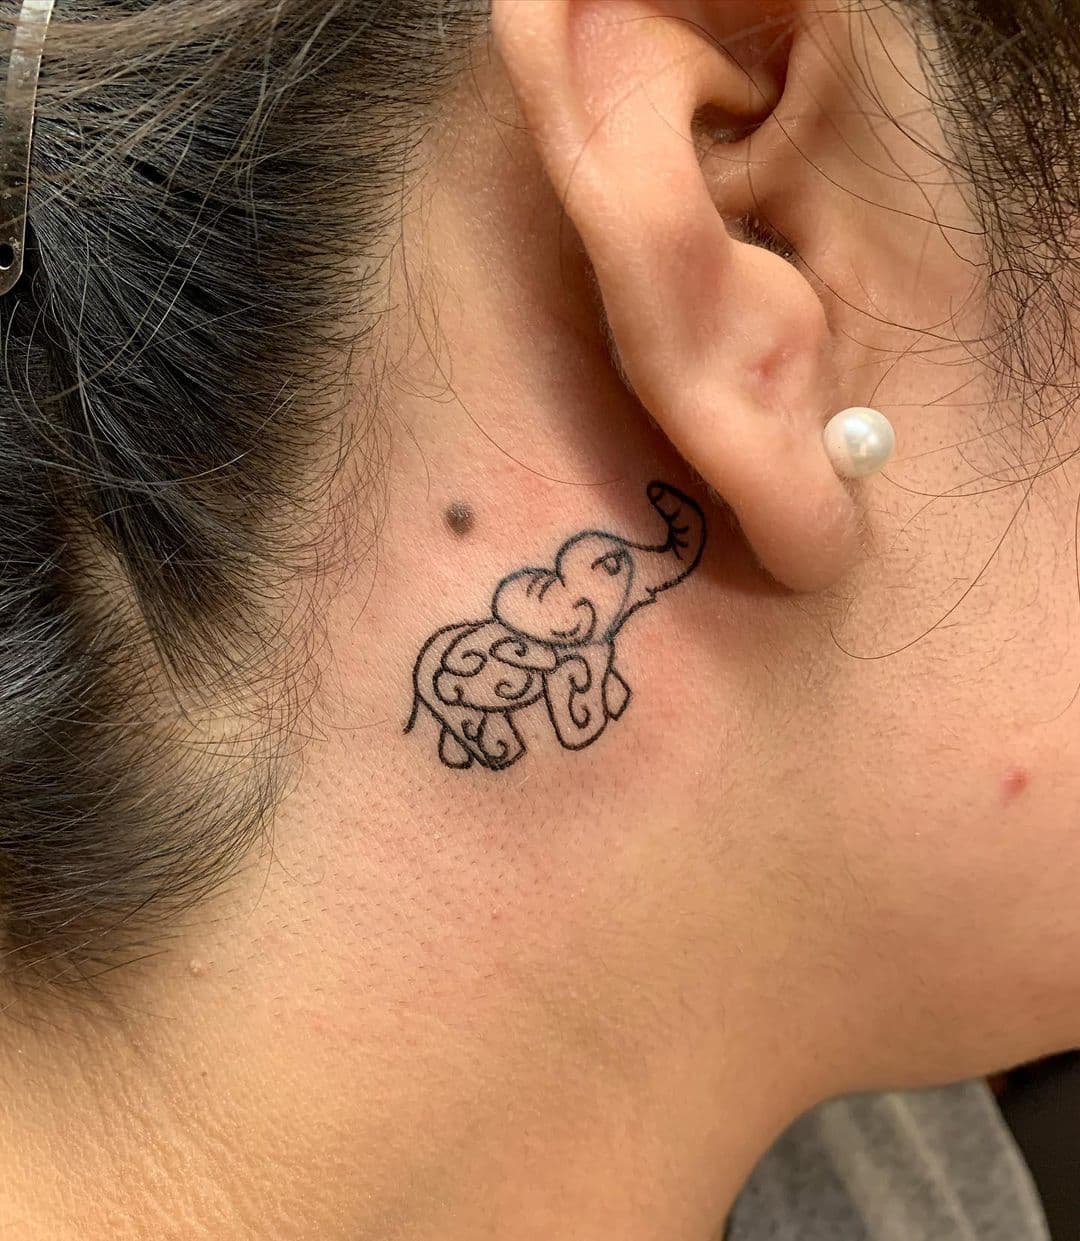 El elefante detrás del tatuaje del héroe